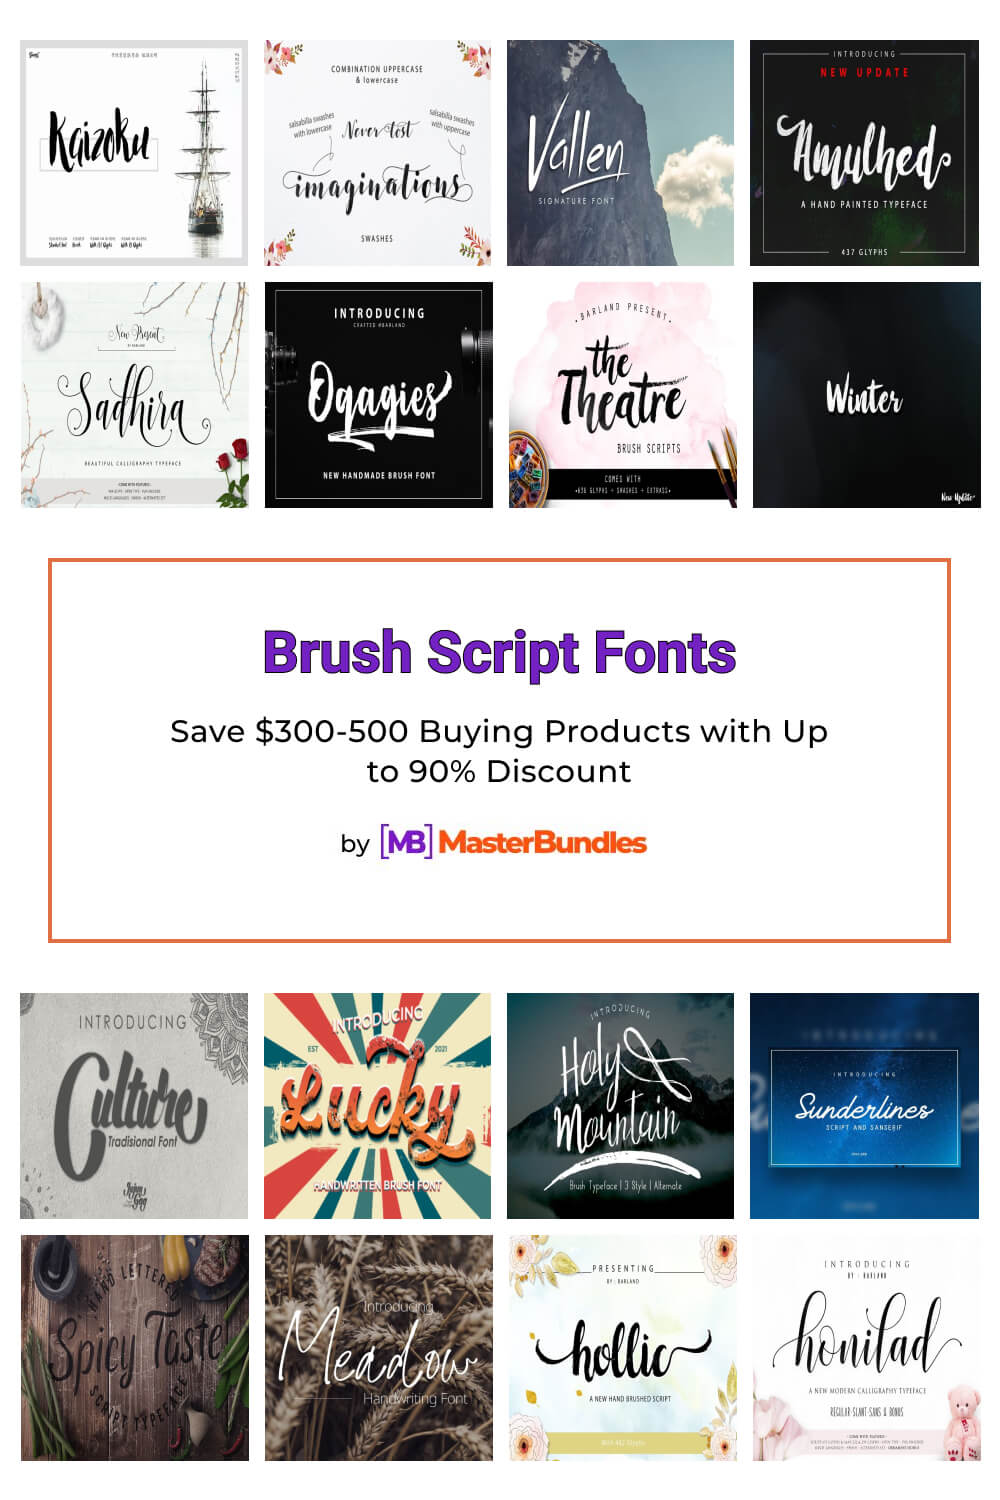 brush script fonts pinterest image.